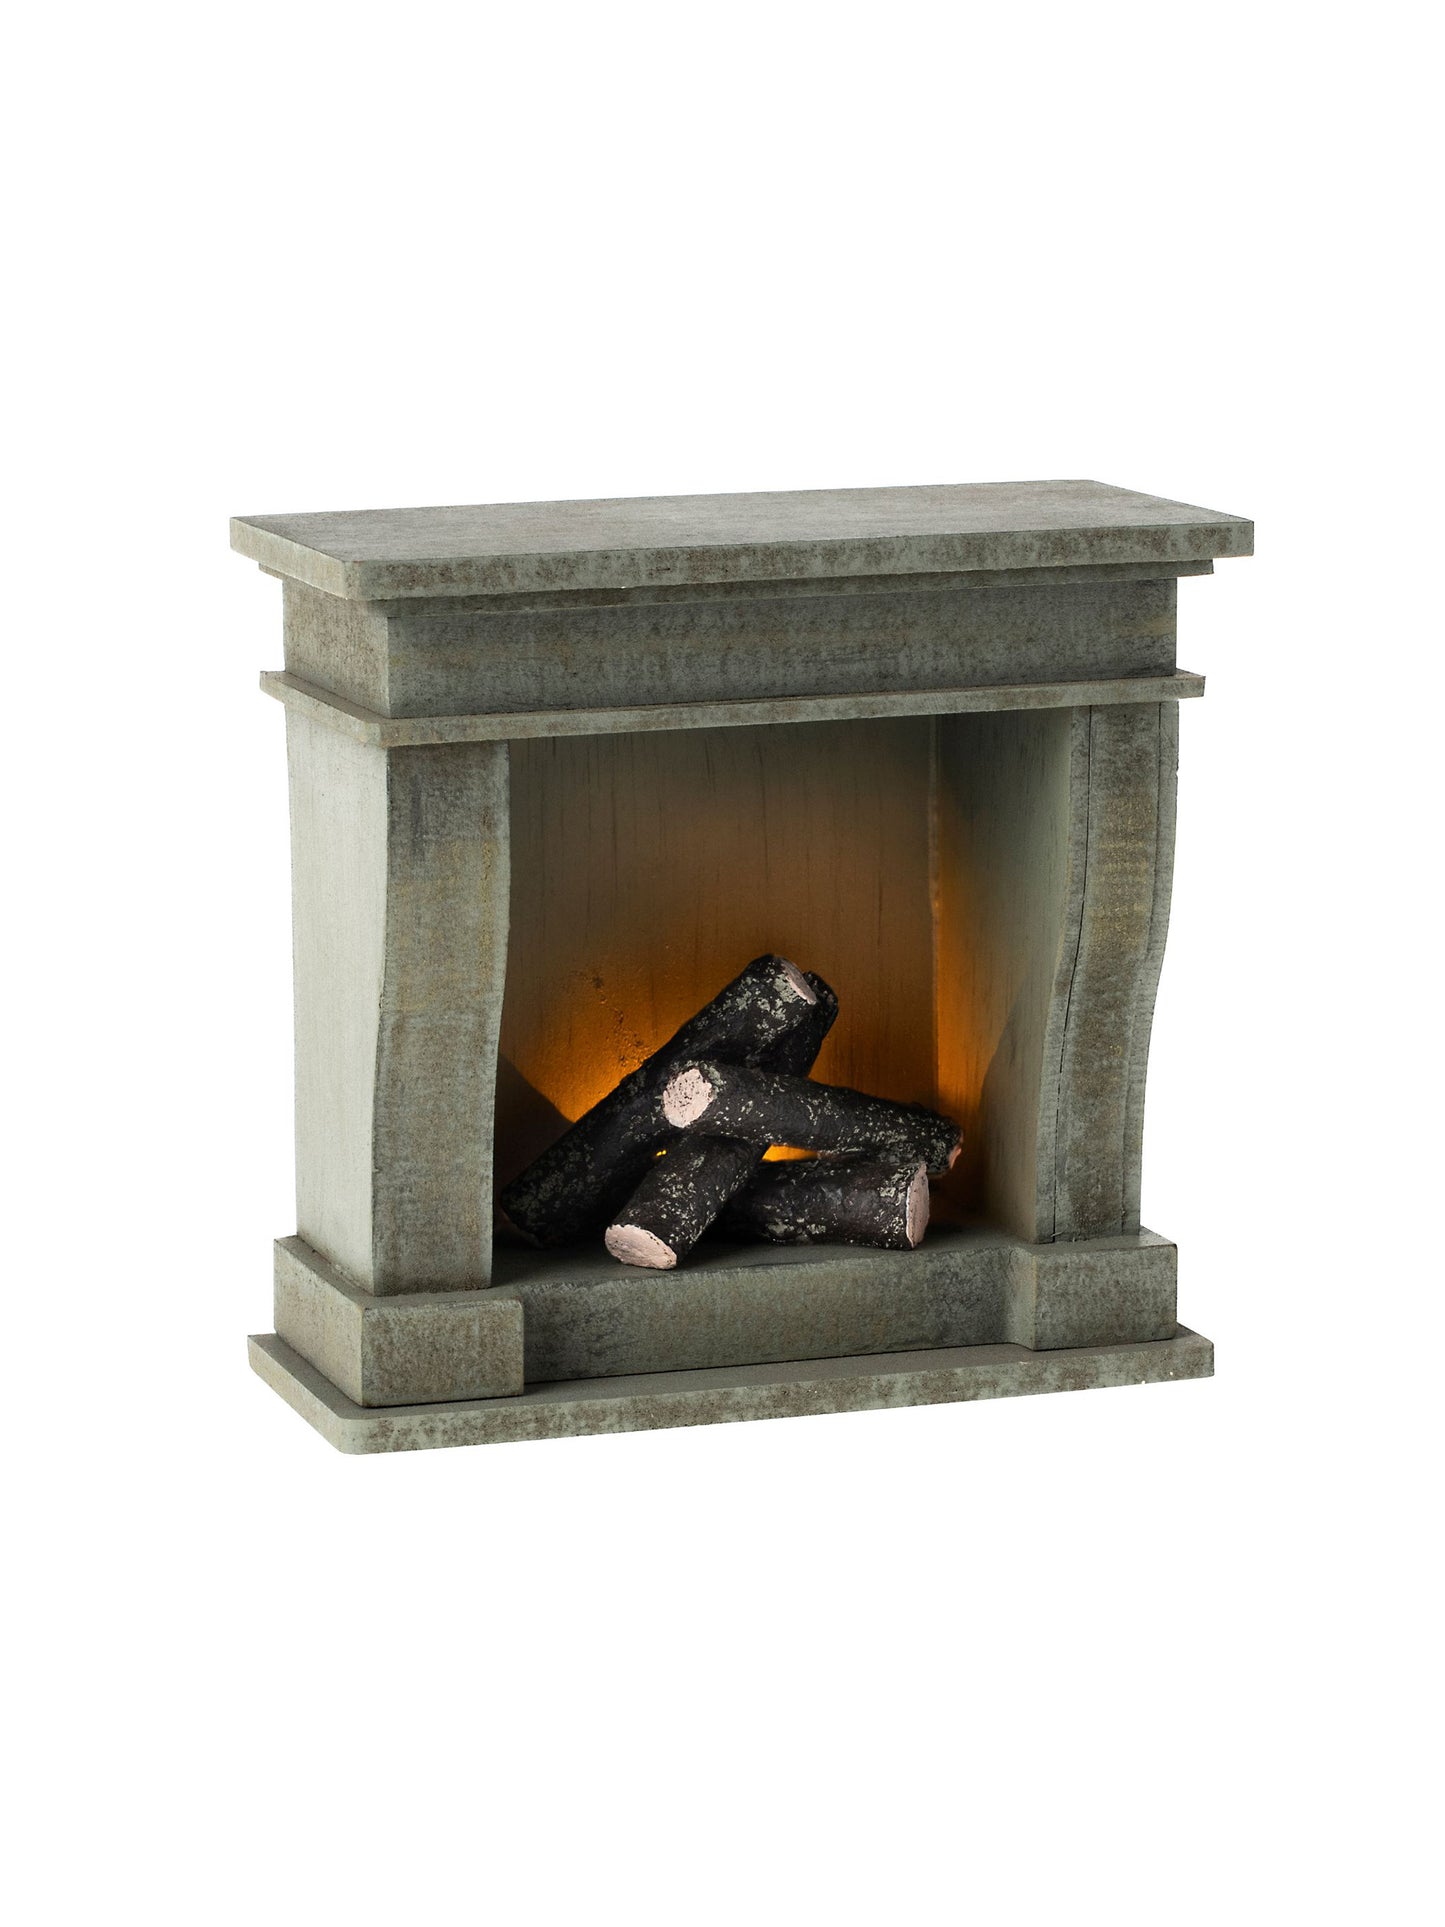 Maileg Miniature Fireplace Weston Table